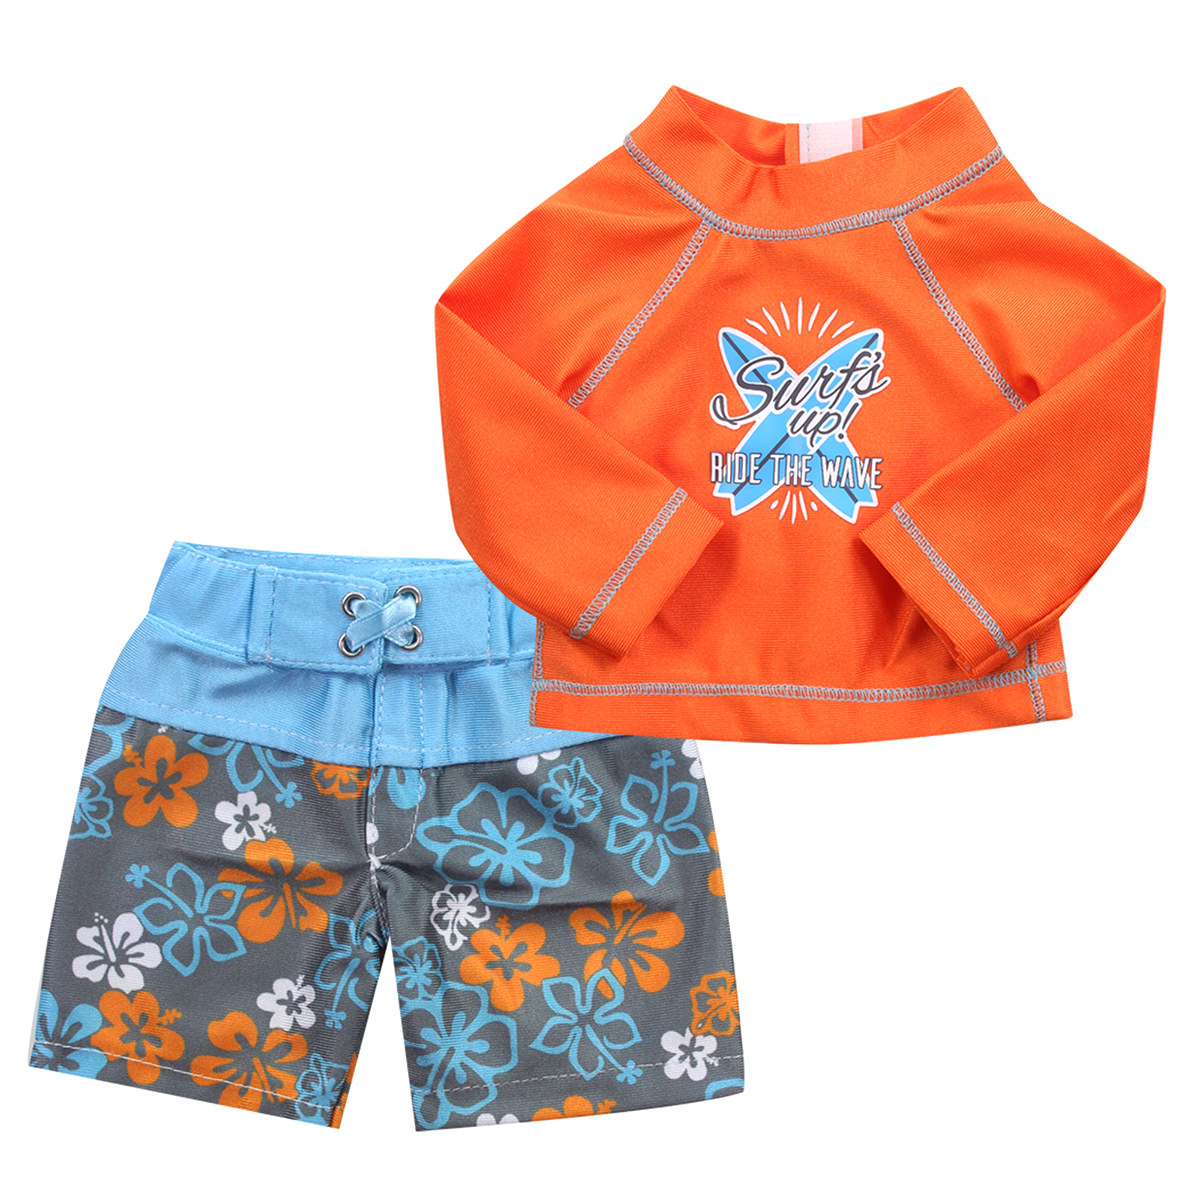 Sophia's(R) Surf Shirt With Flora Print Swim Trunks